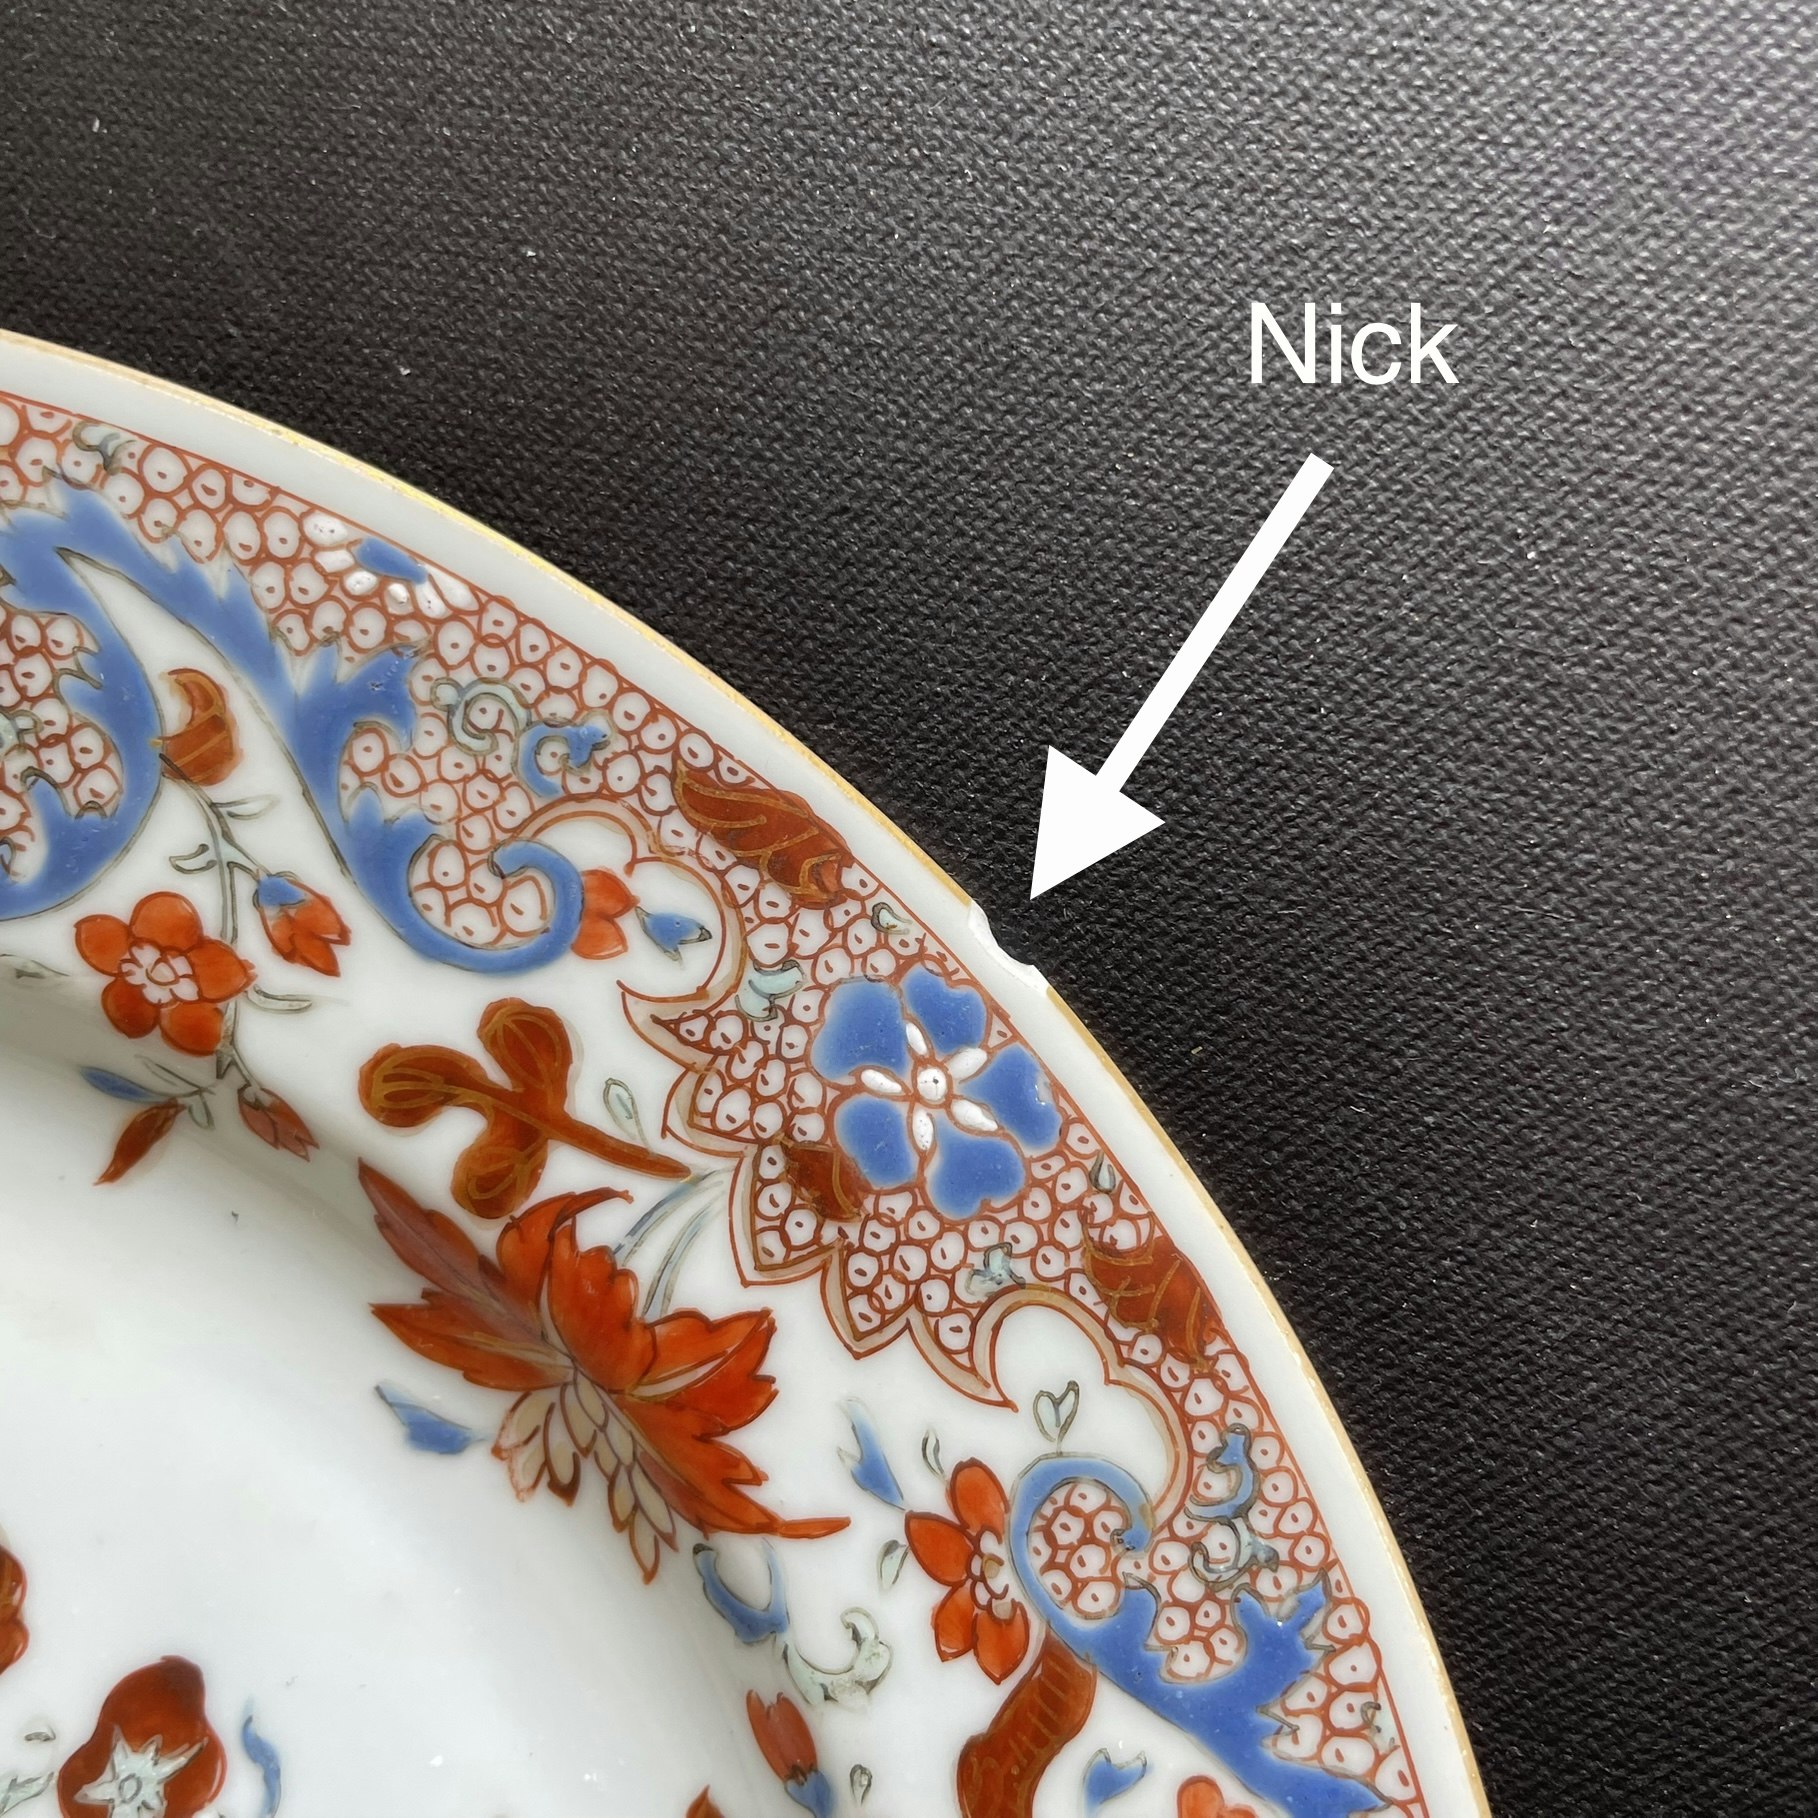 Antique Chinese porcelain plate first half of 18th C Yongzheng / Qianlong #1553